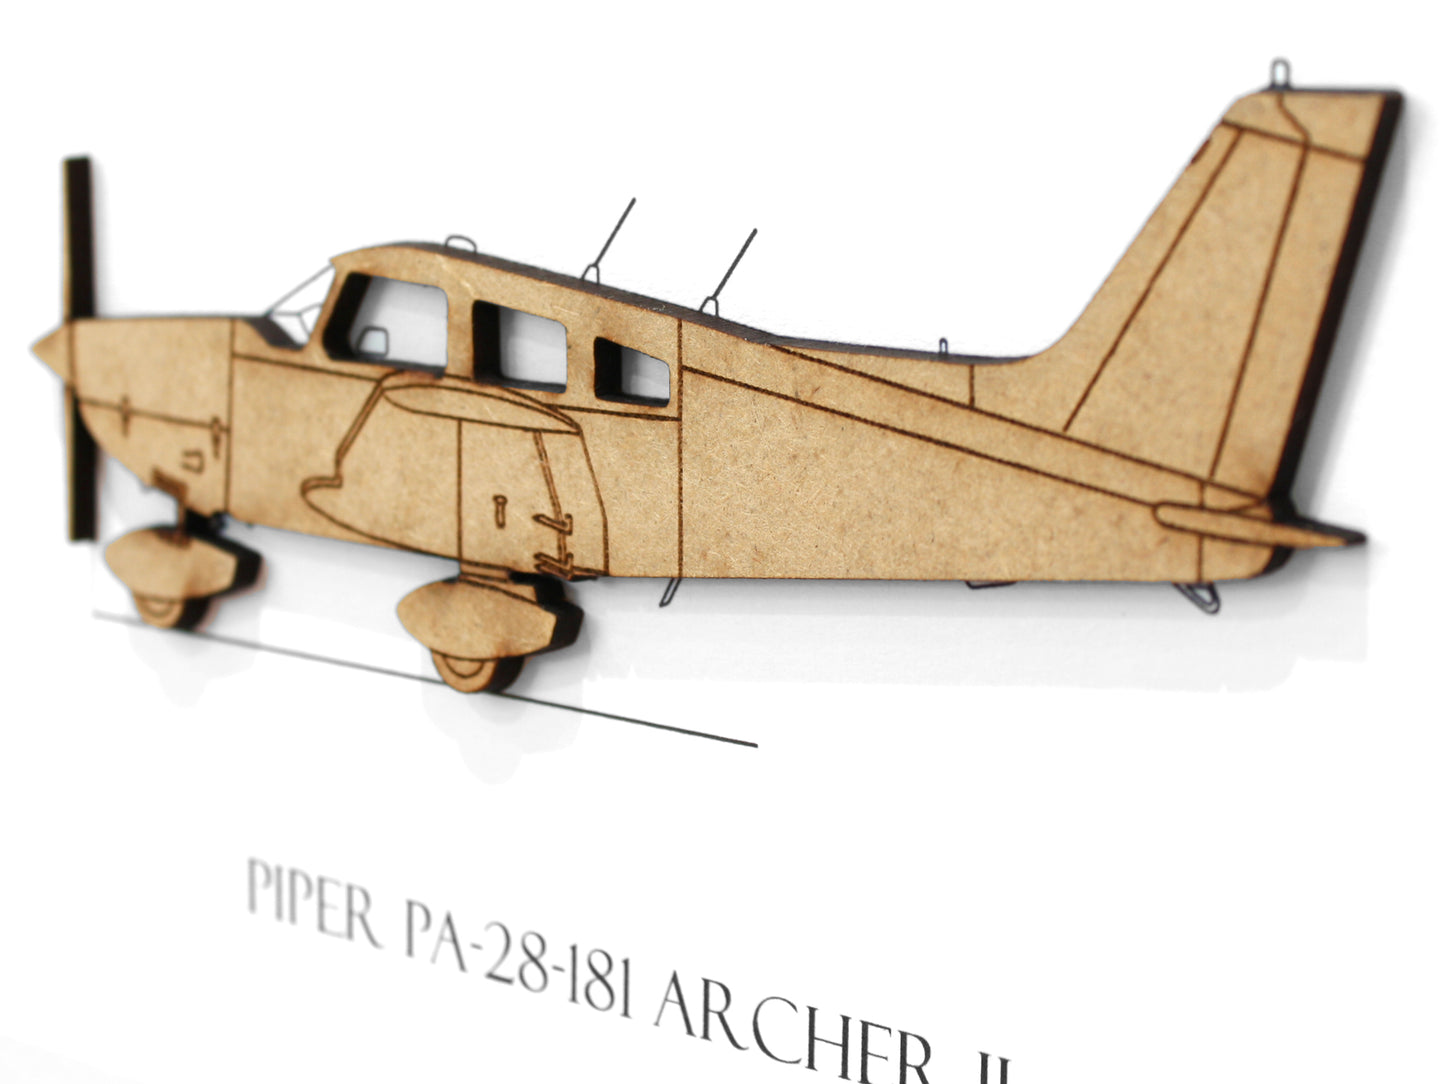 Piper Archer II PA-28-181 gift